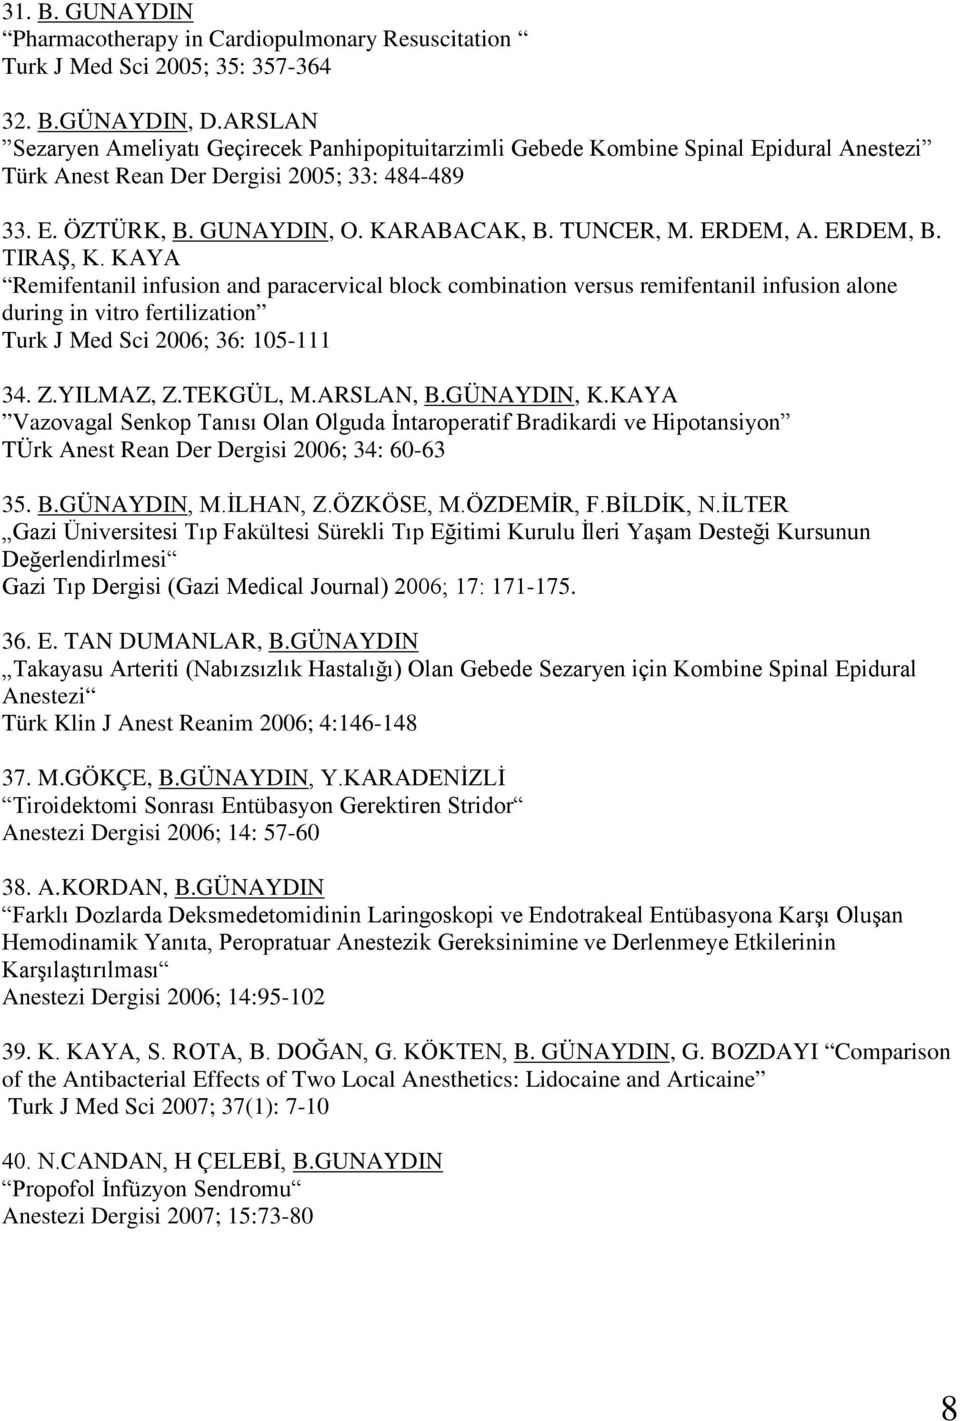 ERDEM, A. ERDEM, B. TIRAŞ, K. KAYA Remifentanil infusion and paracervical block combination versus remifentanil infusion alone during in vitro fertilization Turk J Med Sci 2006; 36: 105-111 34. Z.